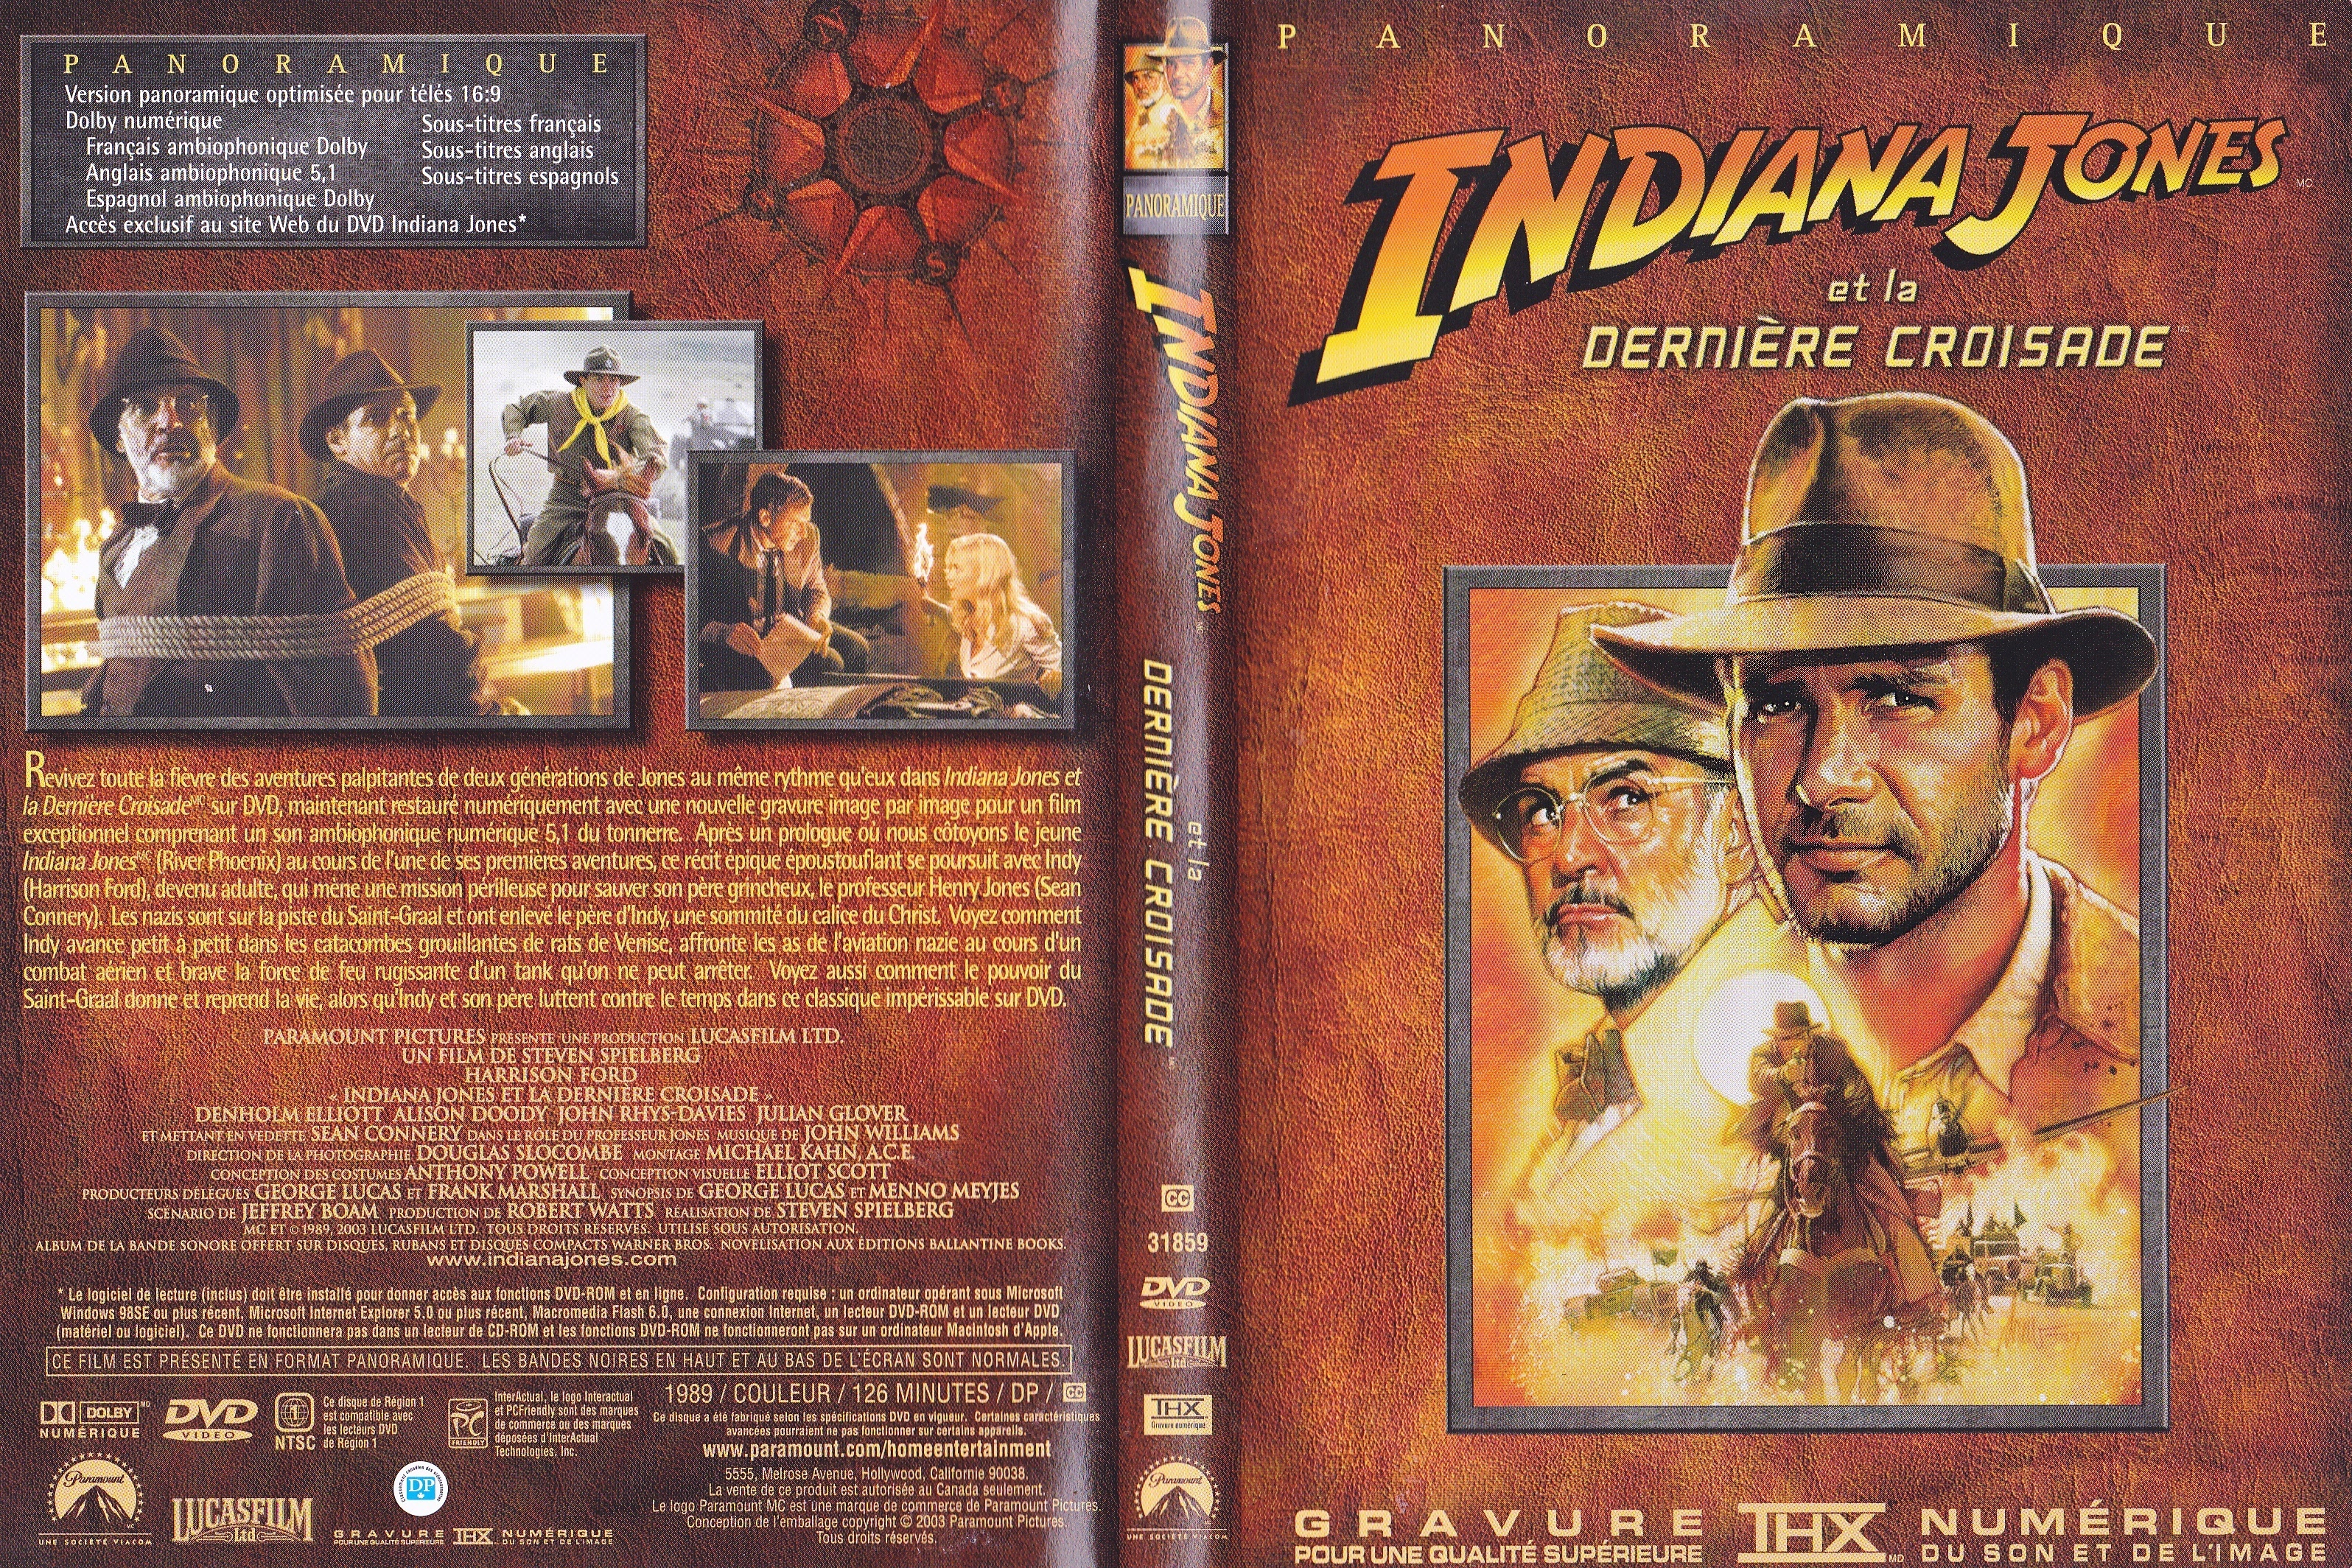 Jaquette DVD Indiana Jones La dernire croisade (Canadienne)